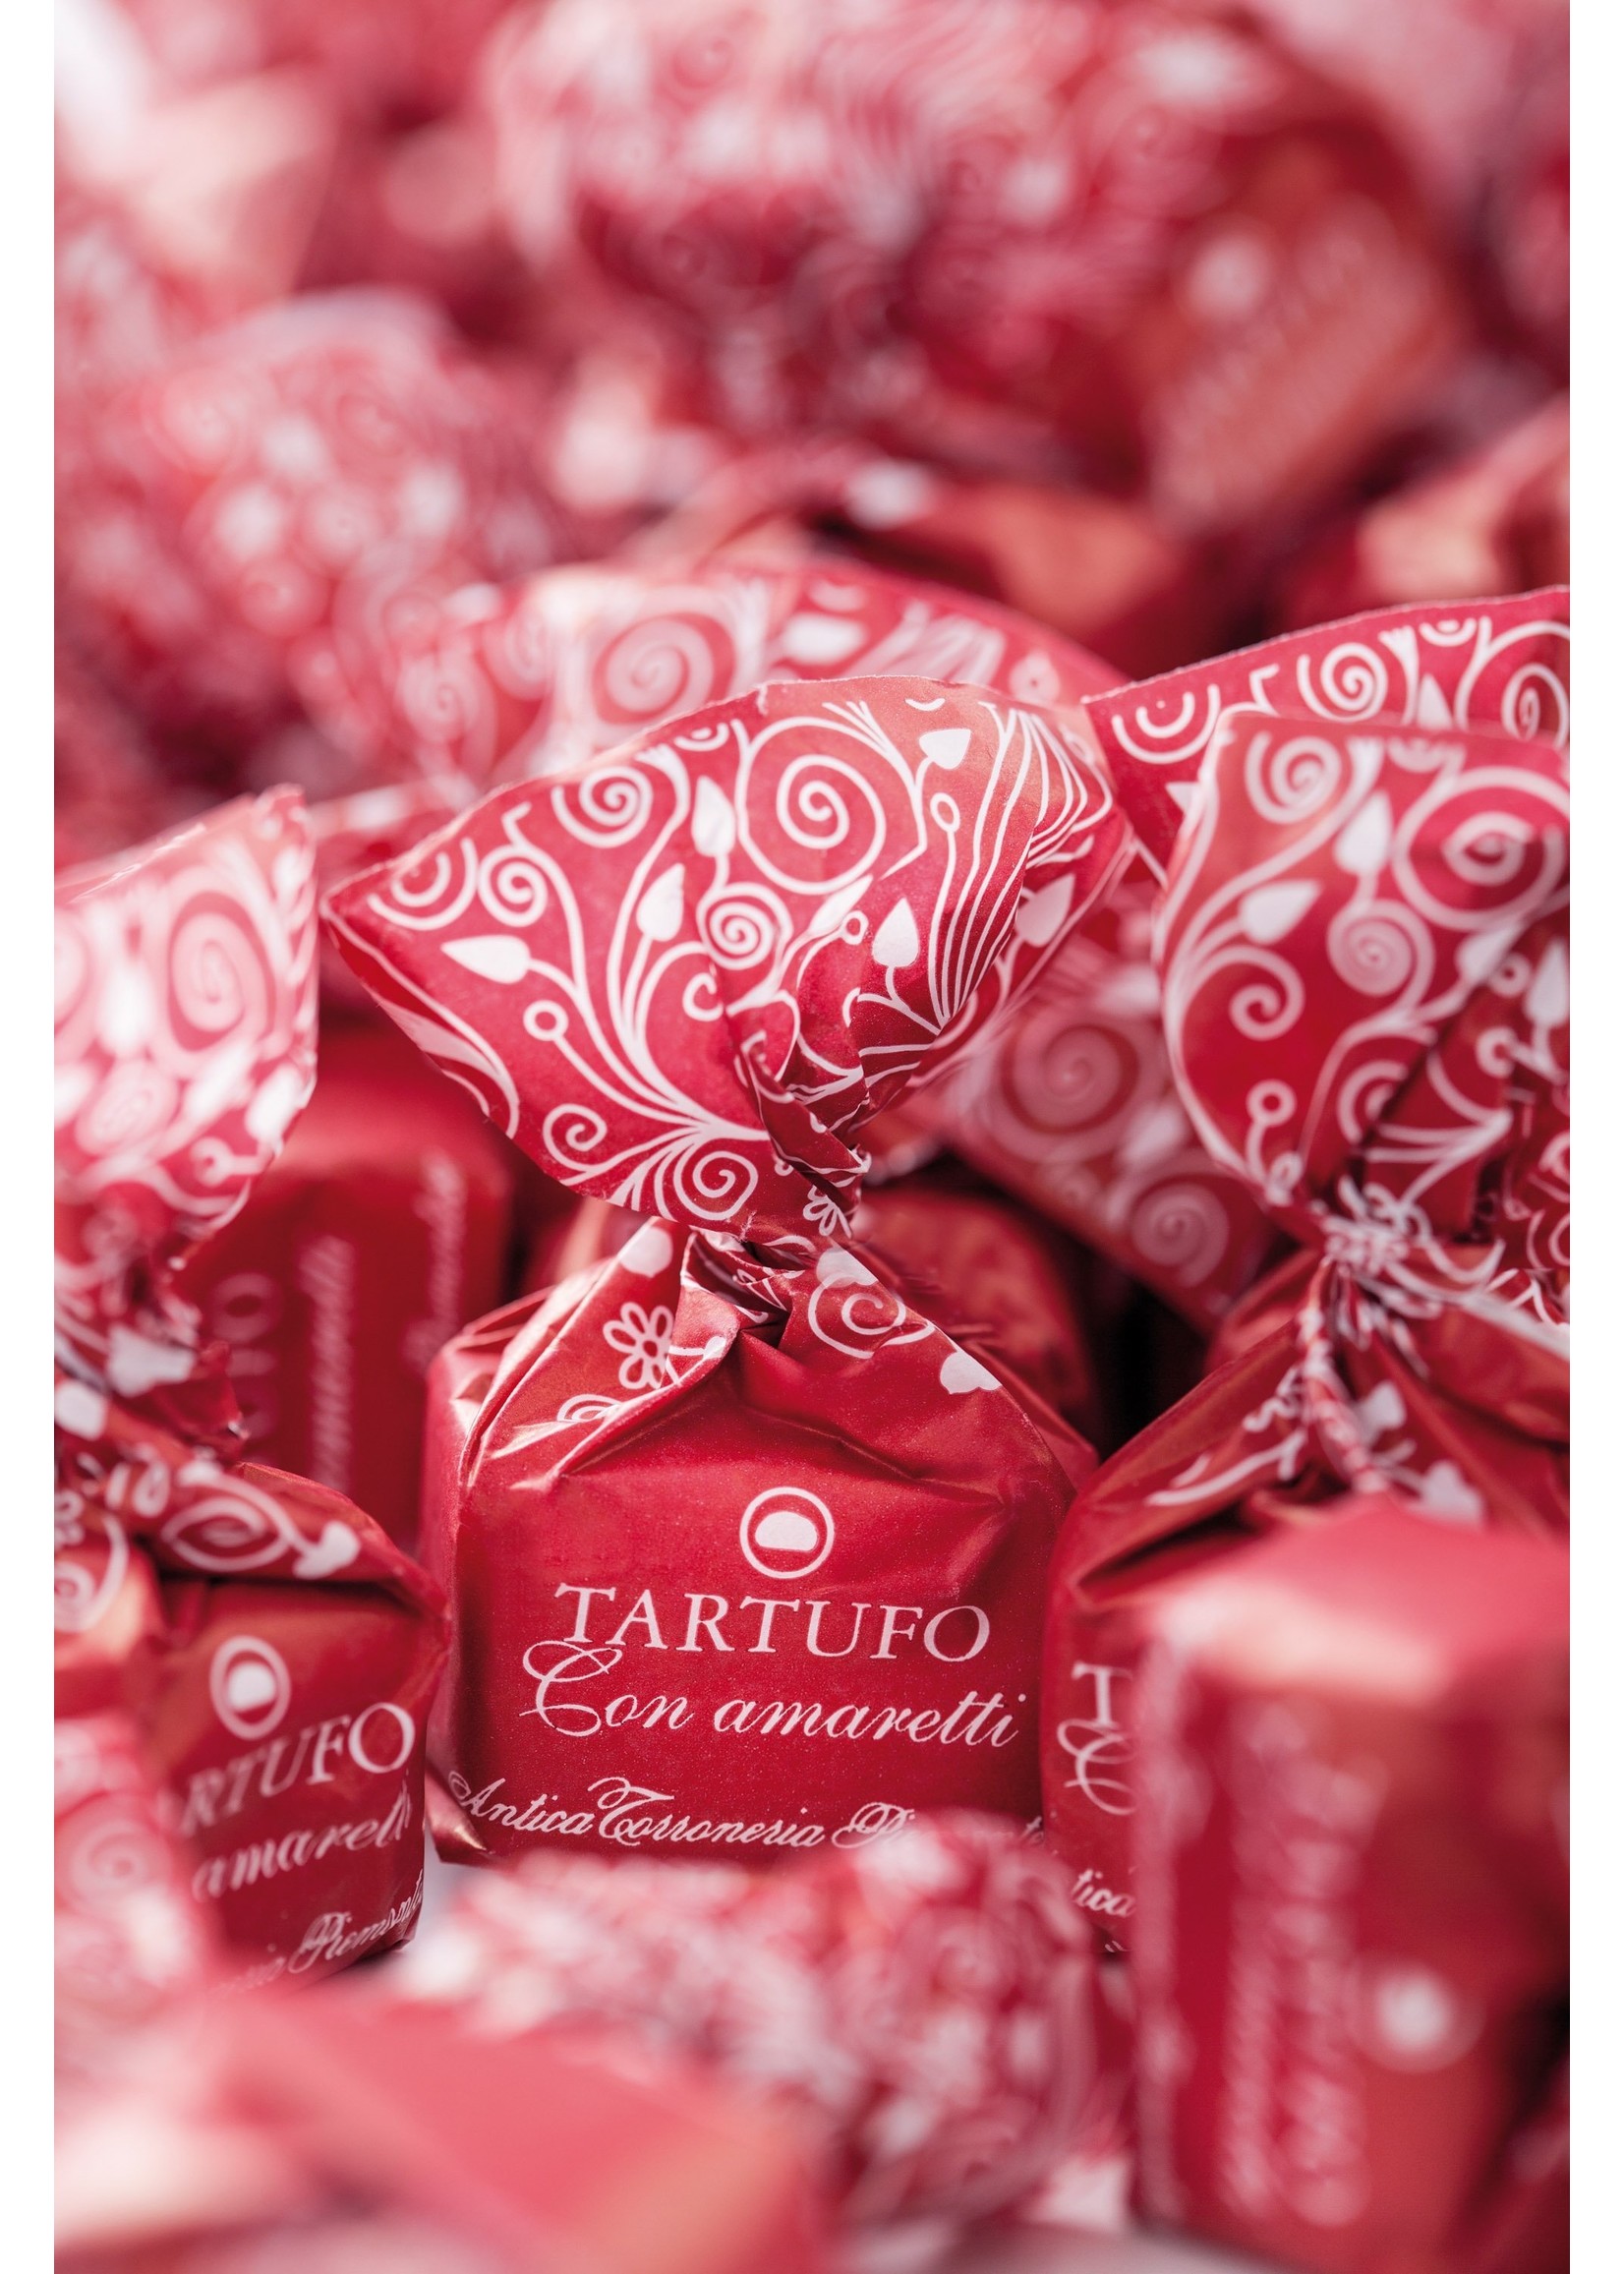 original Italian Tartufo truffle